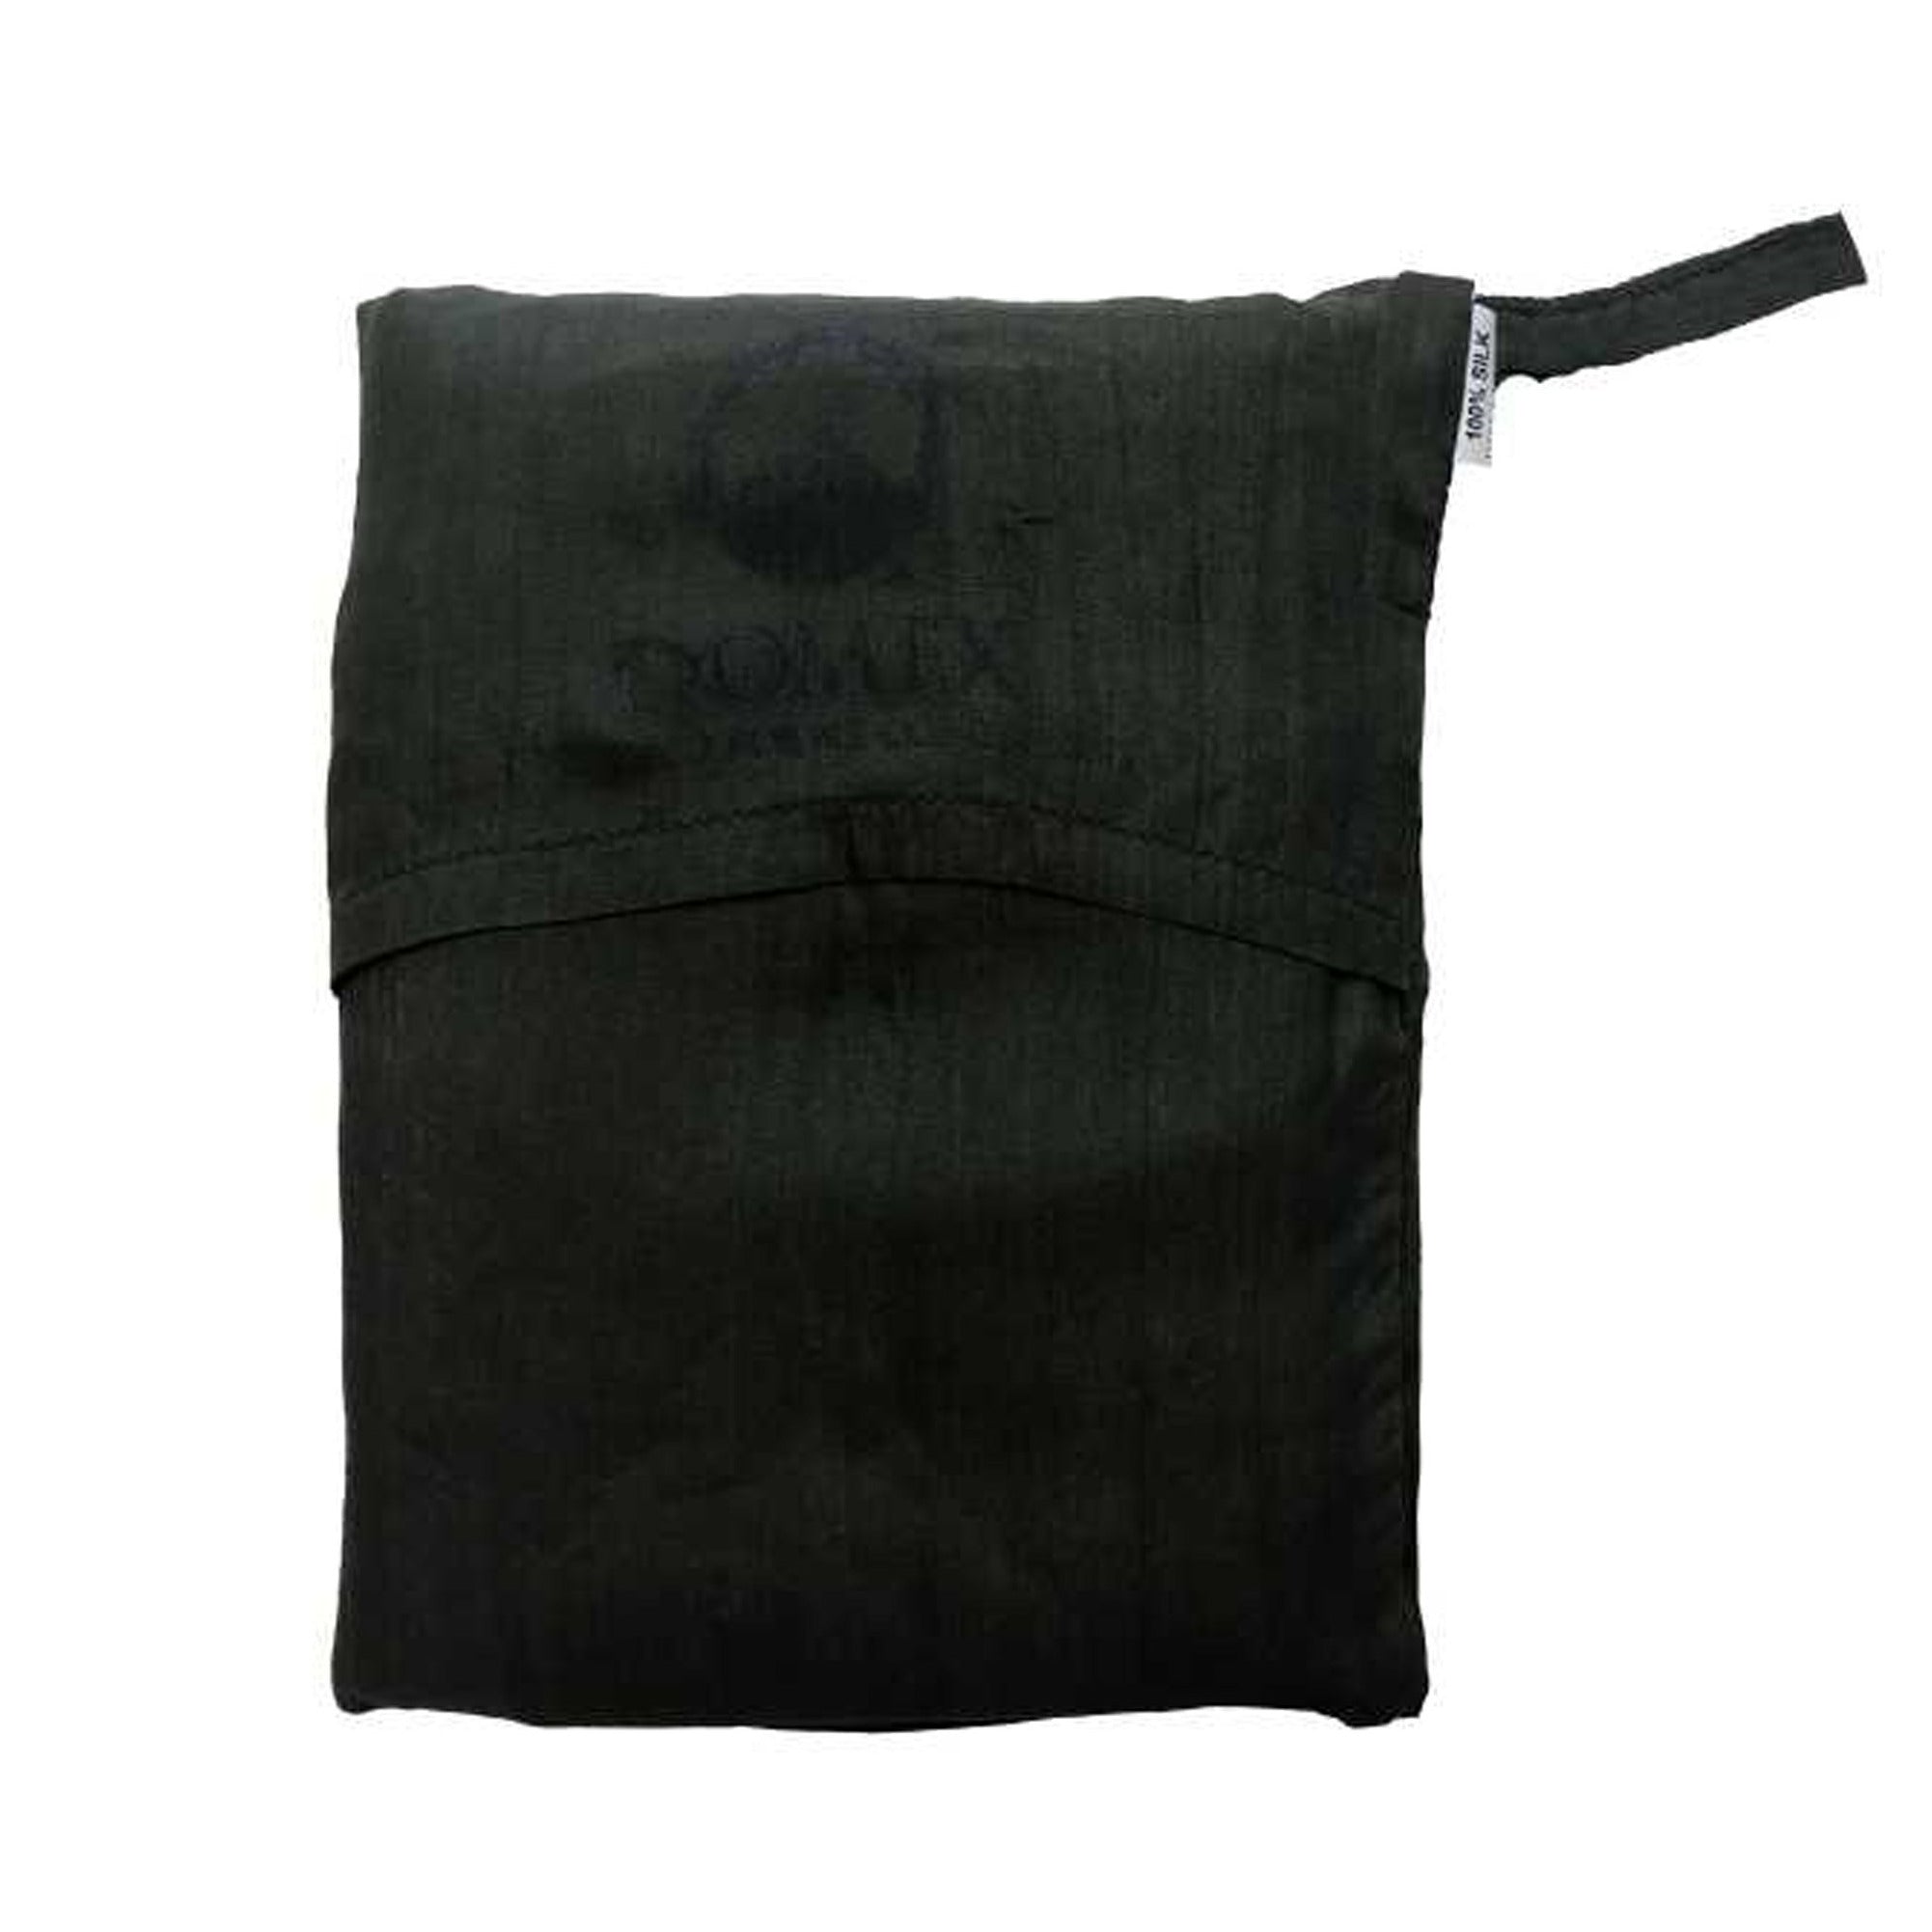 Domex Silk Sleeping Bag Liner – Dwights Outdoors